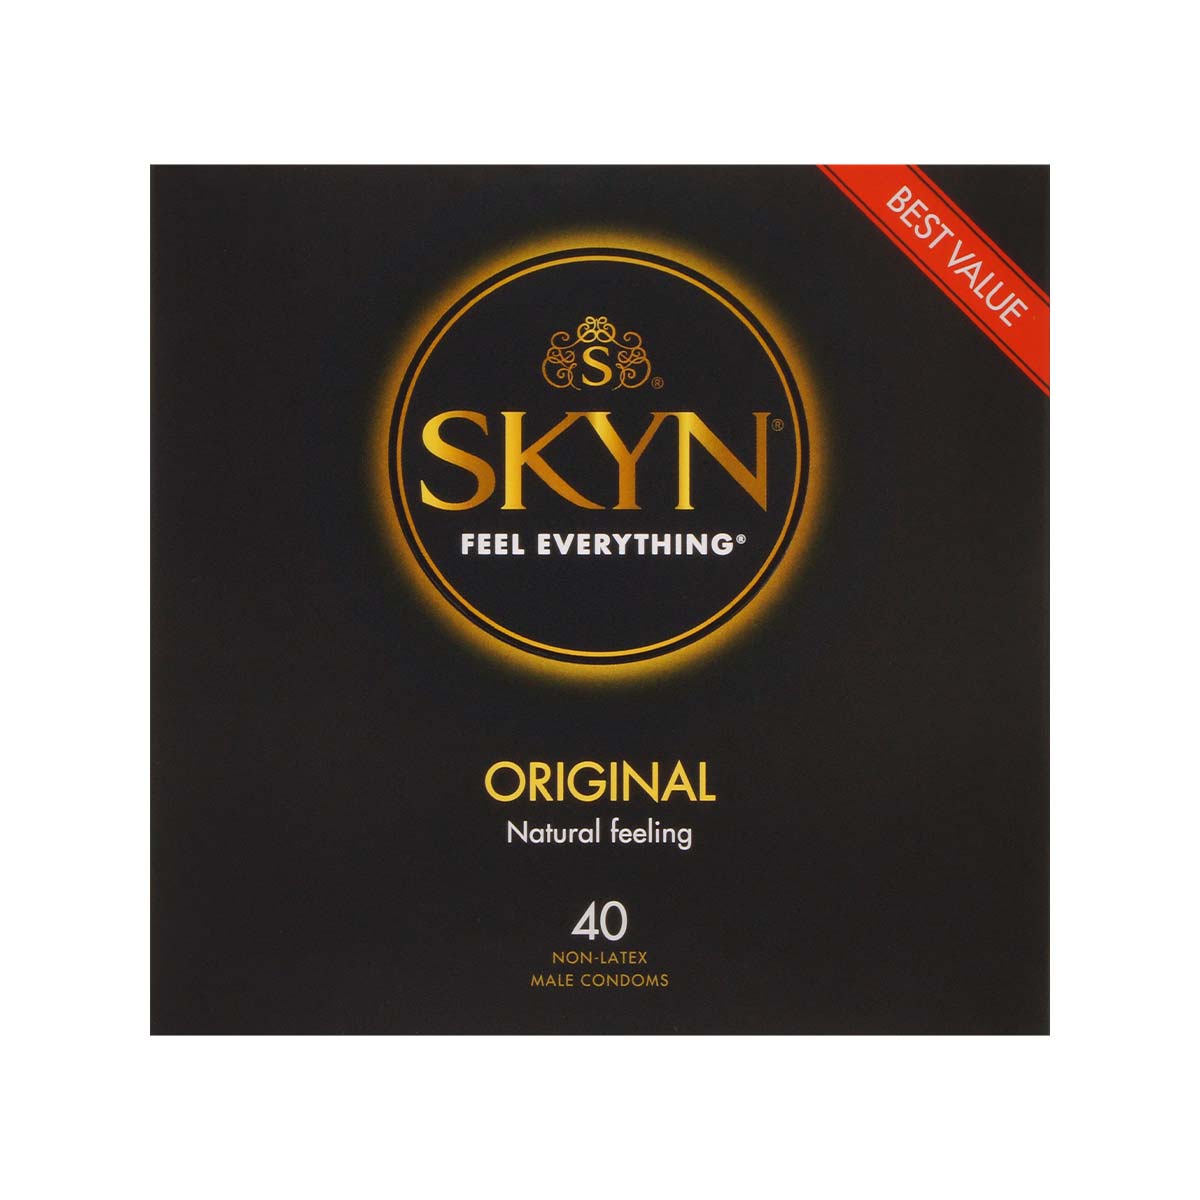 SKYN Original 40's Pack iR Condom-p_2